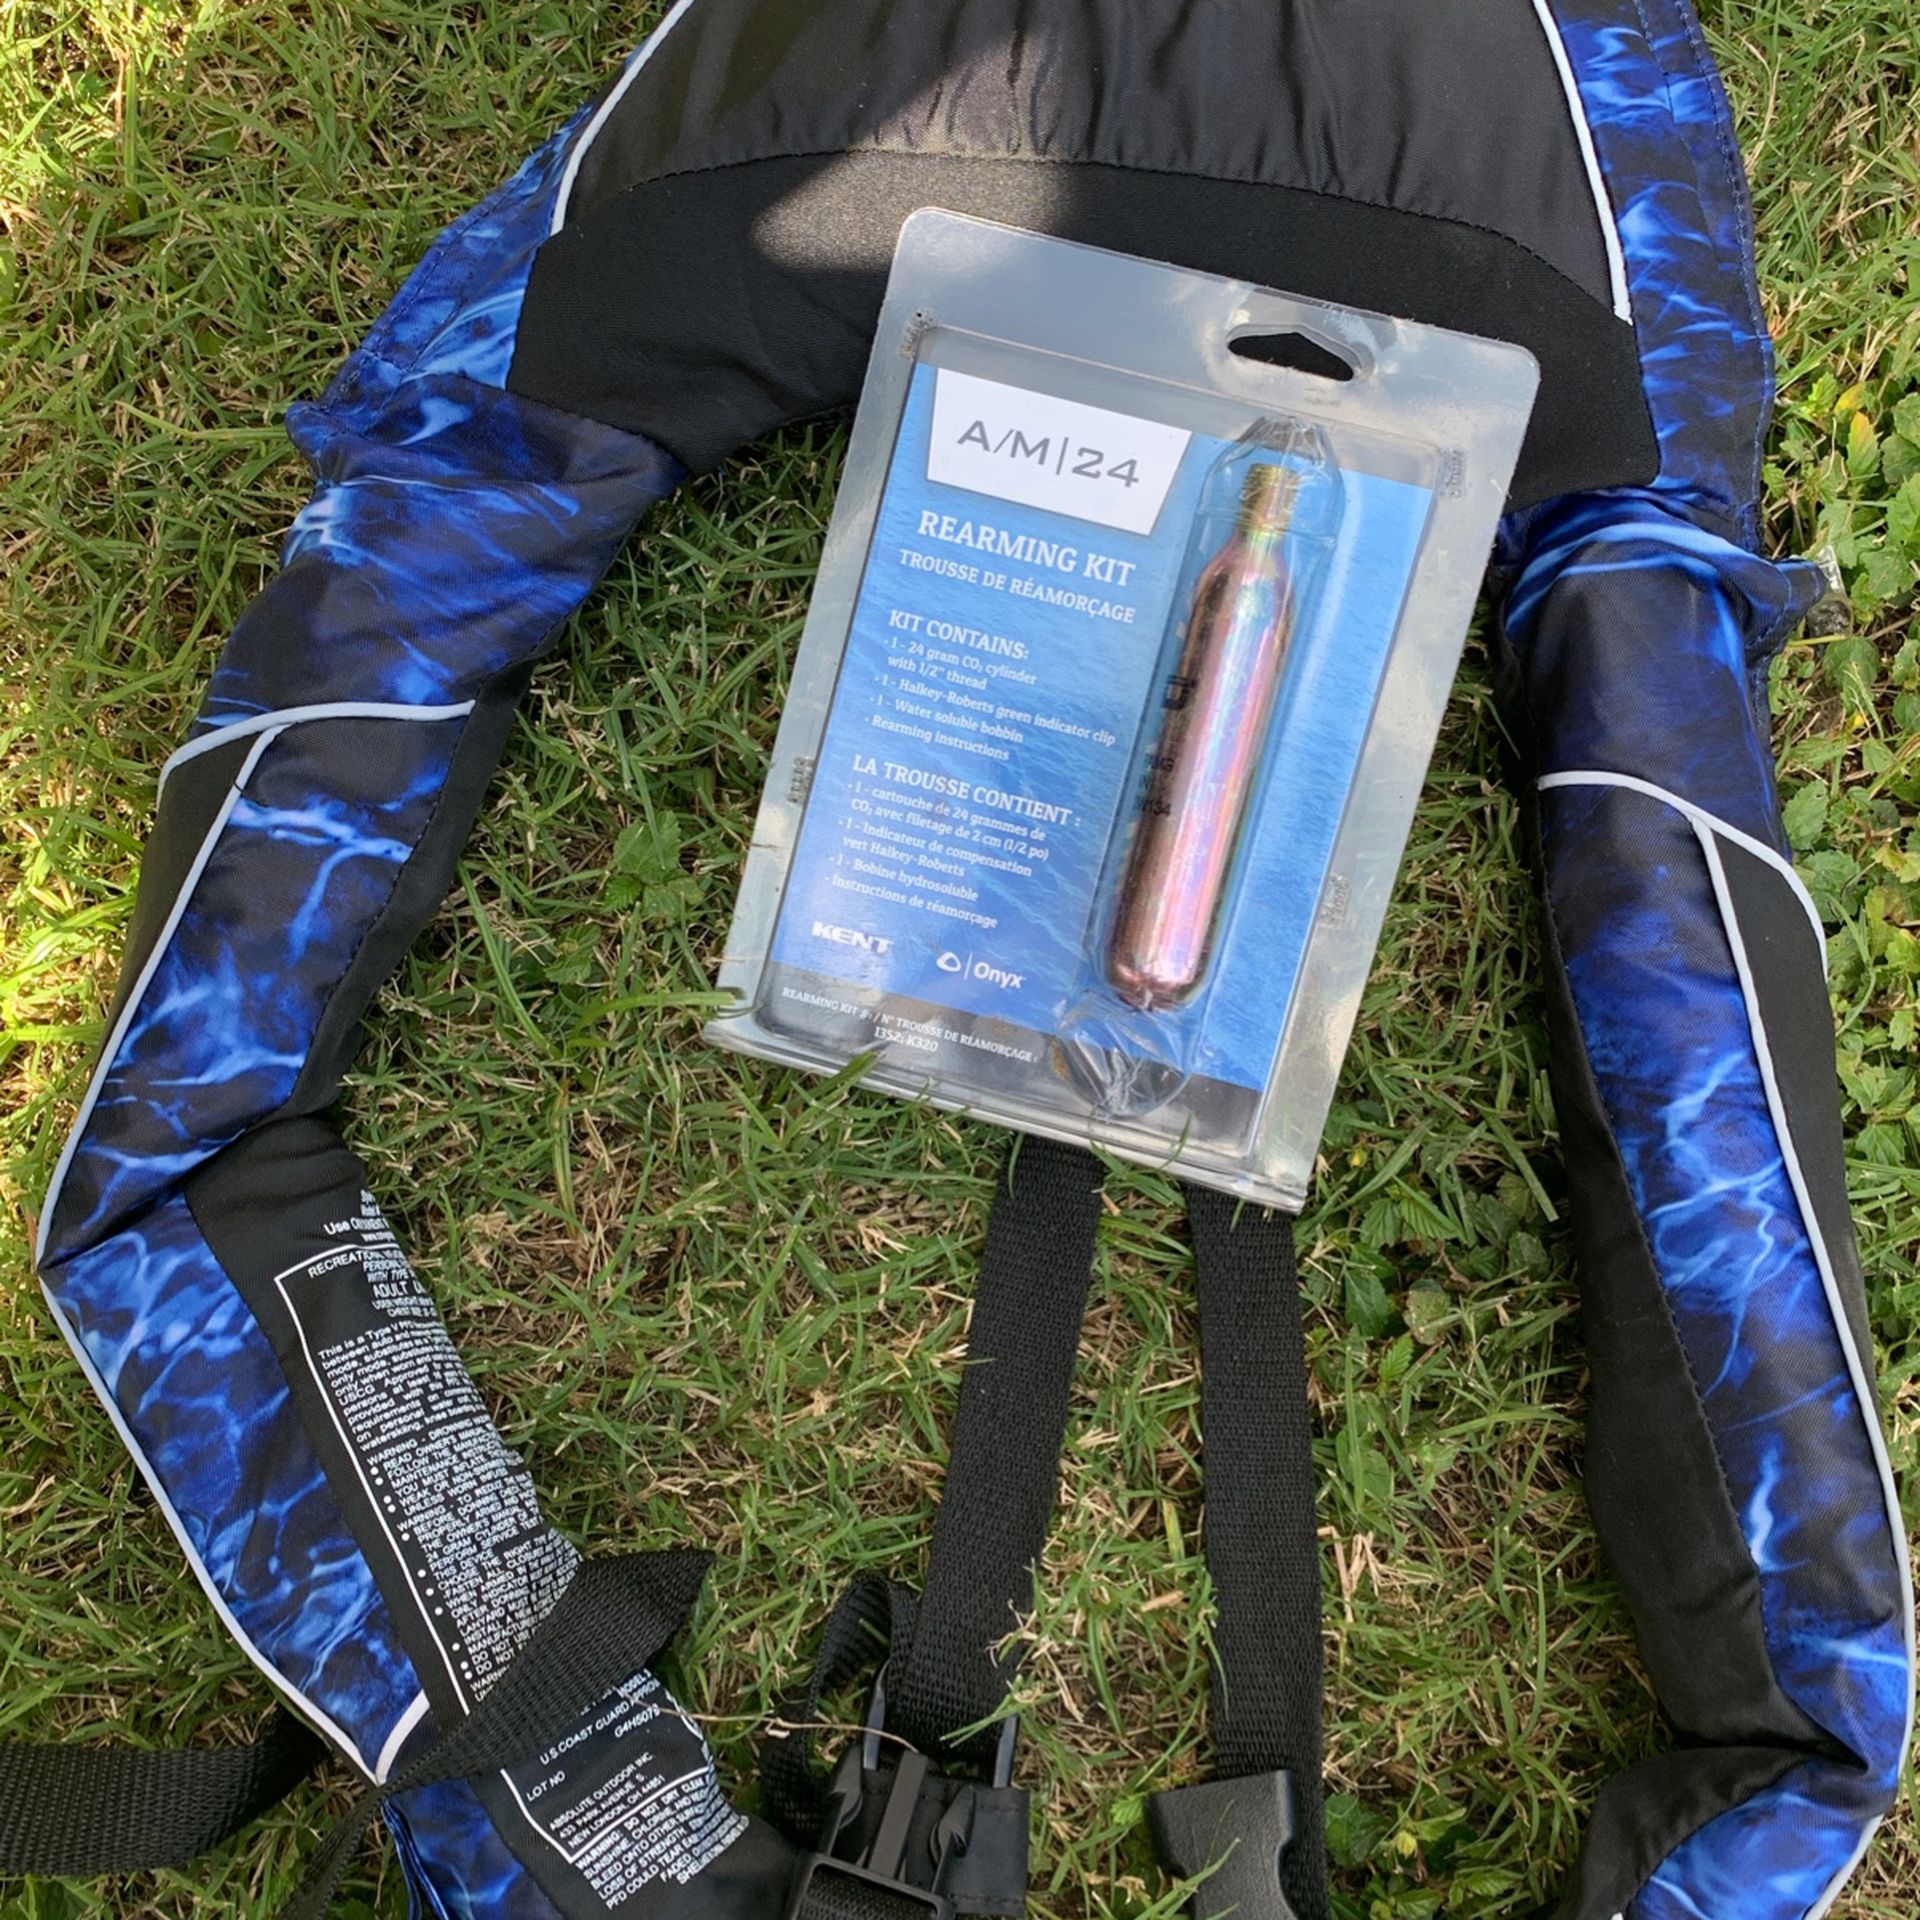 Onyx Life Jacket And Rearming Kit